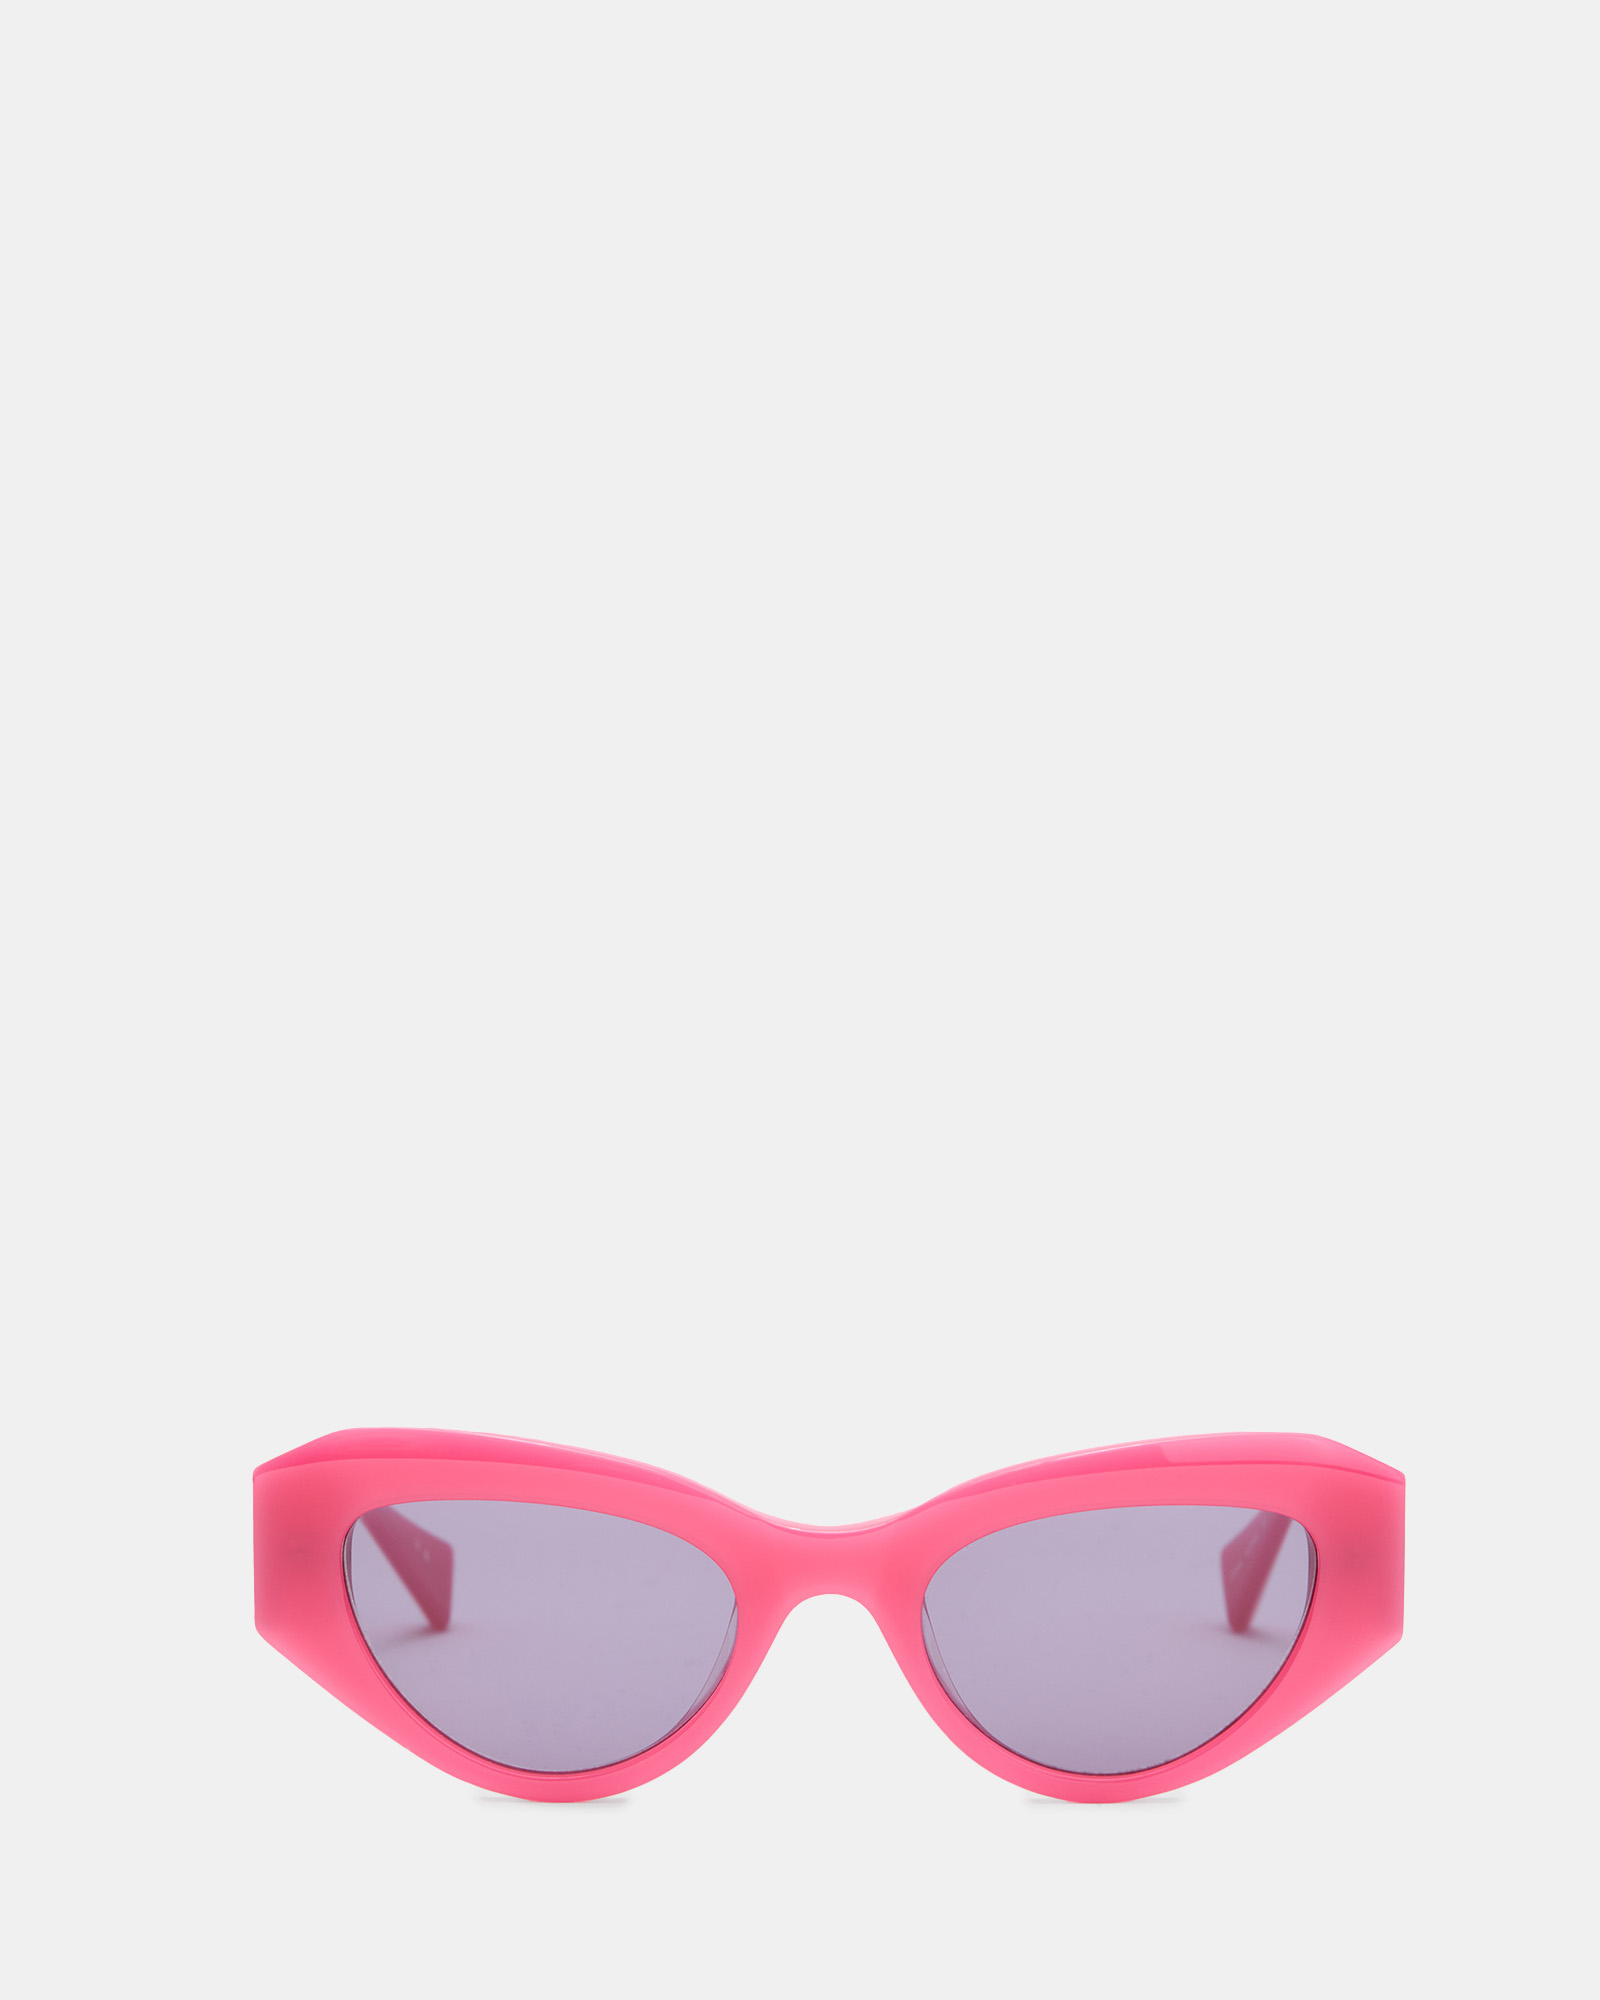 AllSaints Calypso Bevelled Cat Eye Sunglasses,, Hot Pink